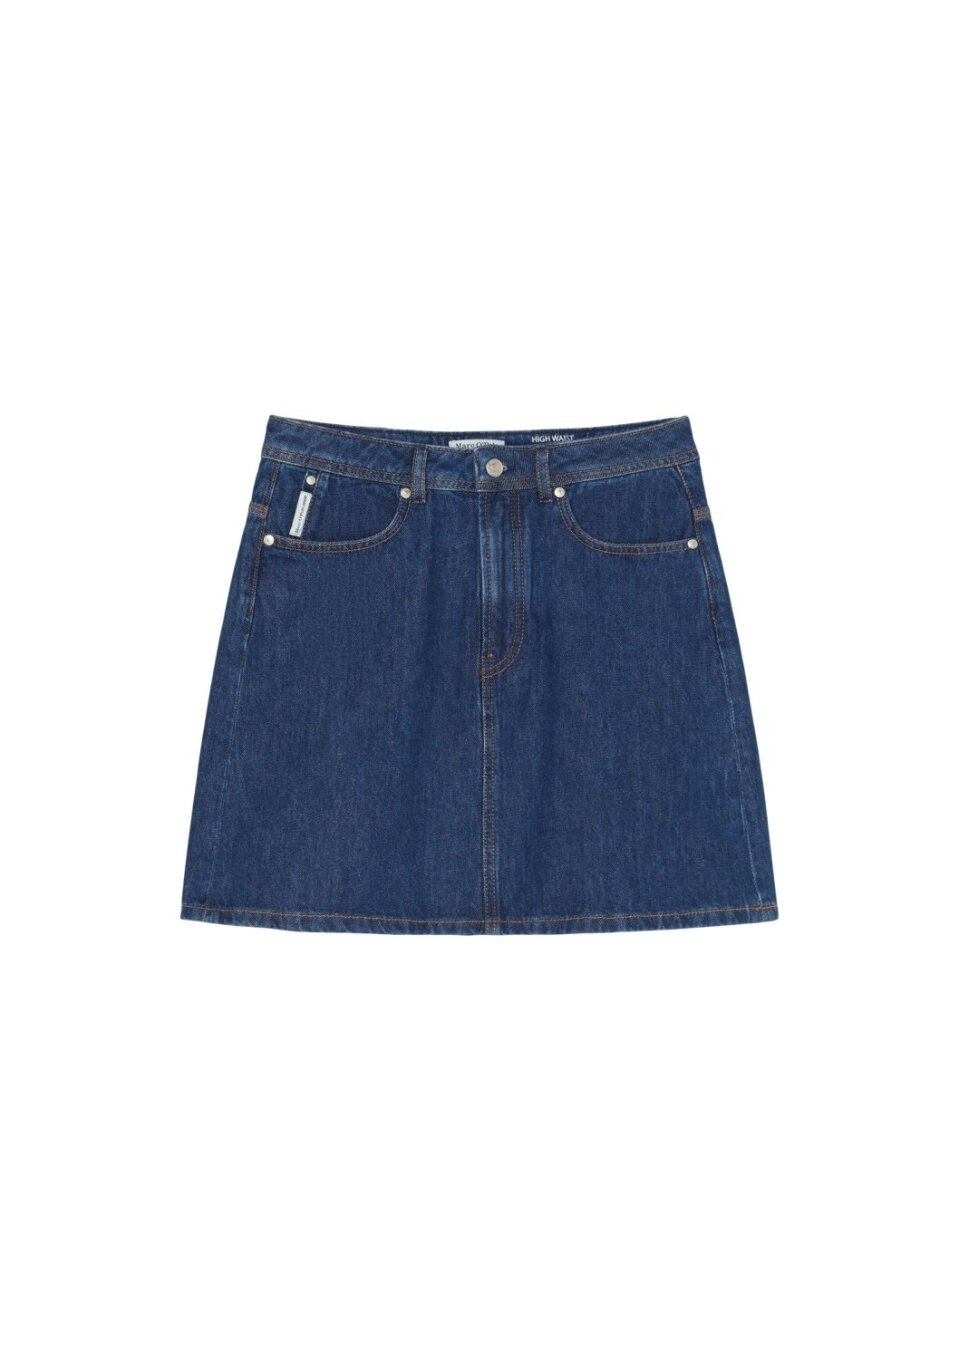 Denim Skirt, A-Shaped Fit, Mini Len